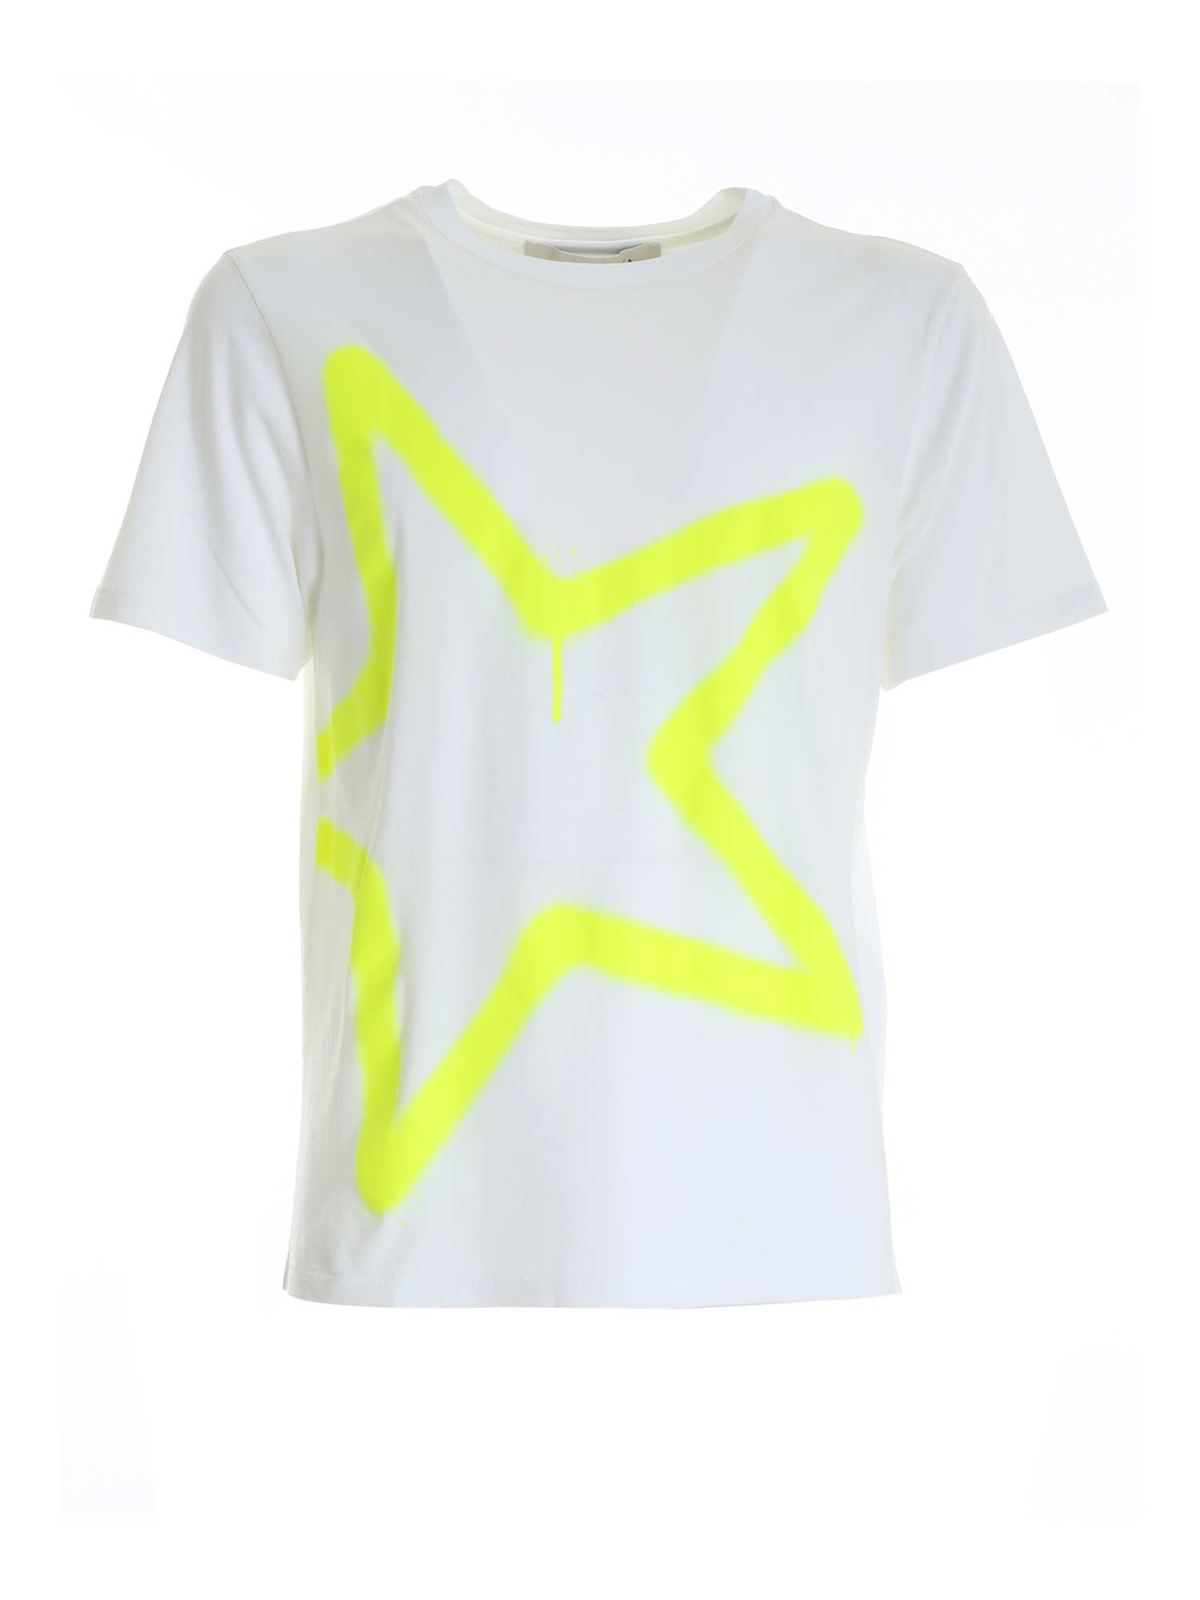 Adamo Star T-shirt in white